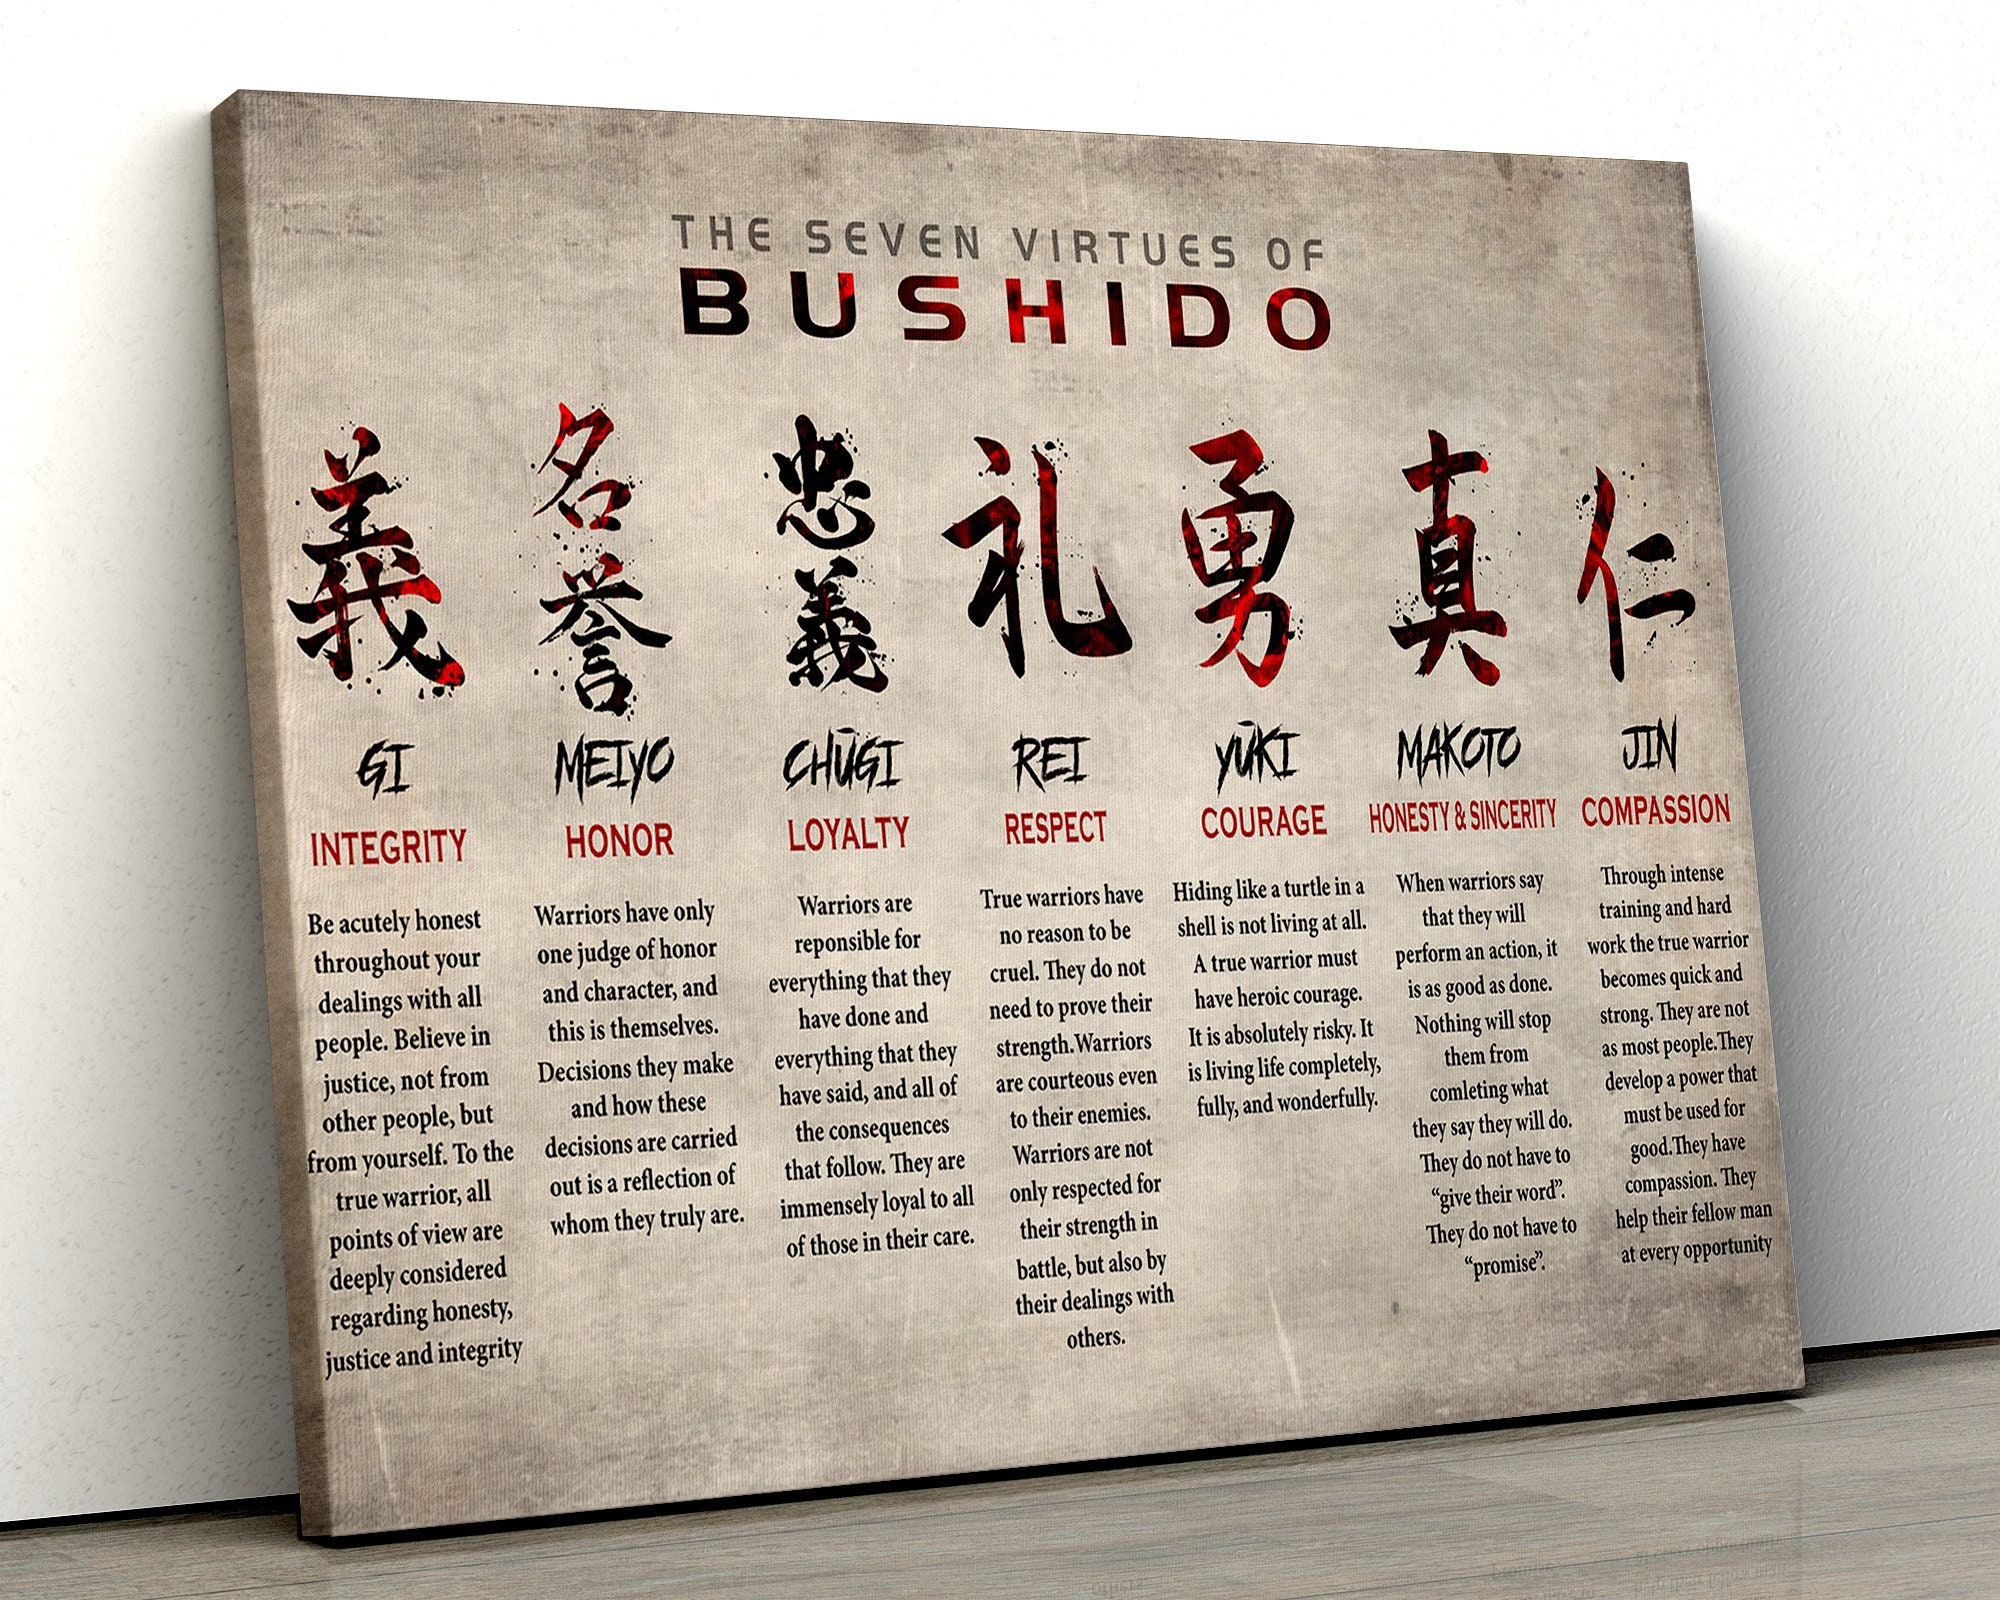 BUSHIDO CODE - THE SOUL OF JAPAN - VIRTUES OF THE SAMURAI & HOW